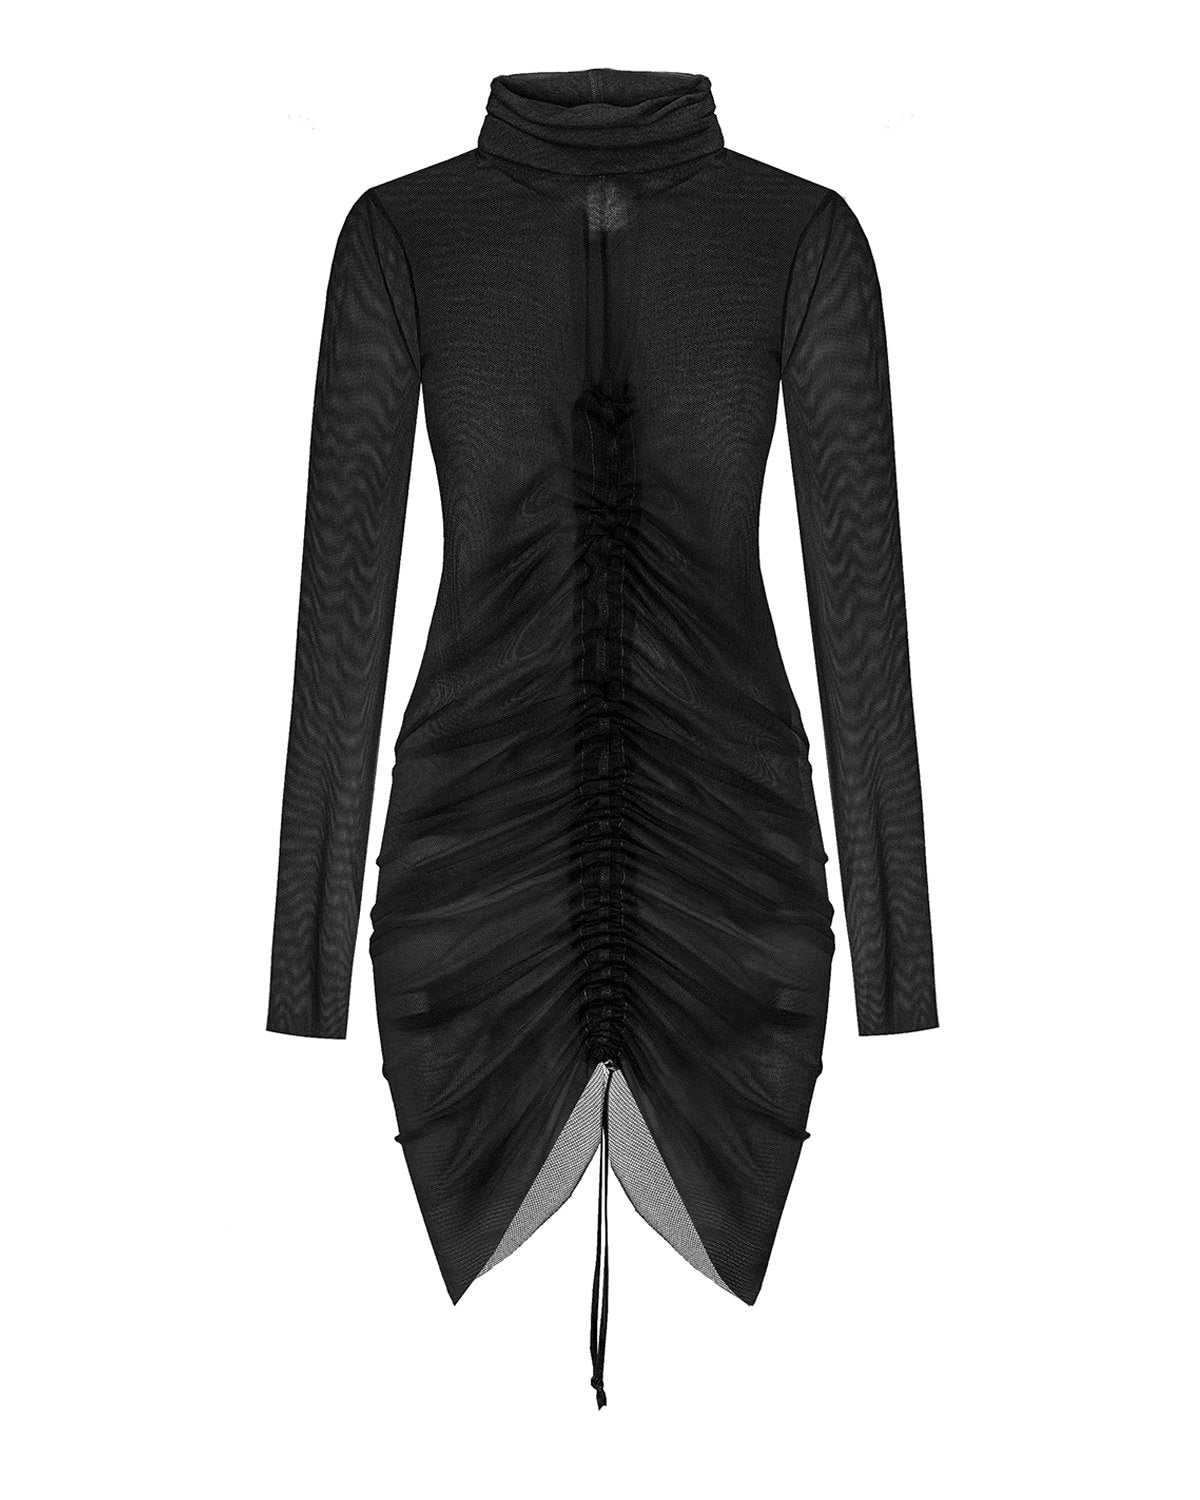 Translucent dress black